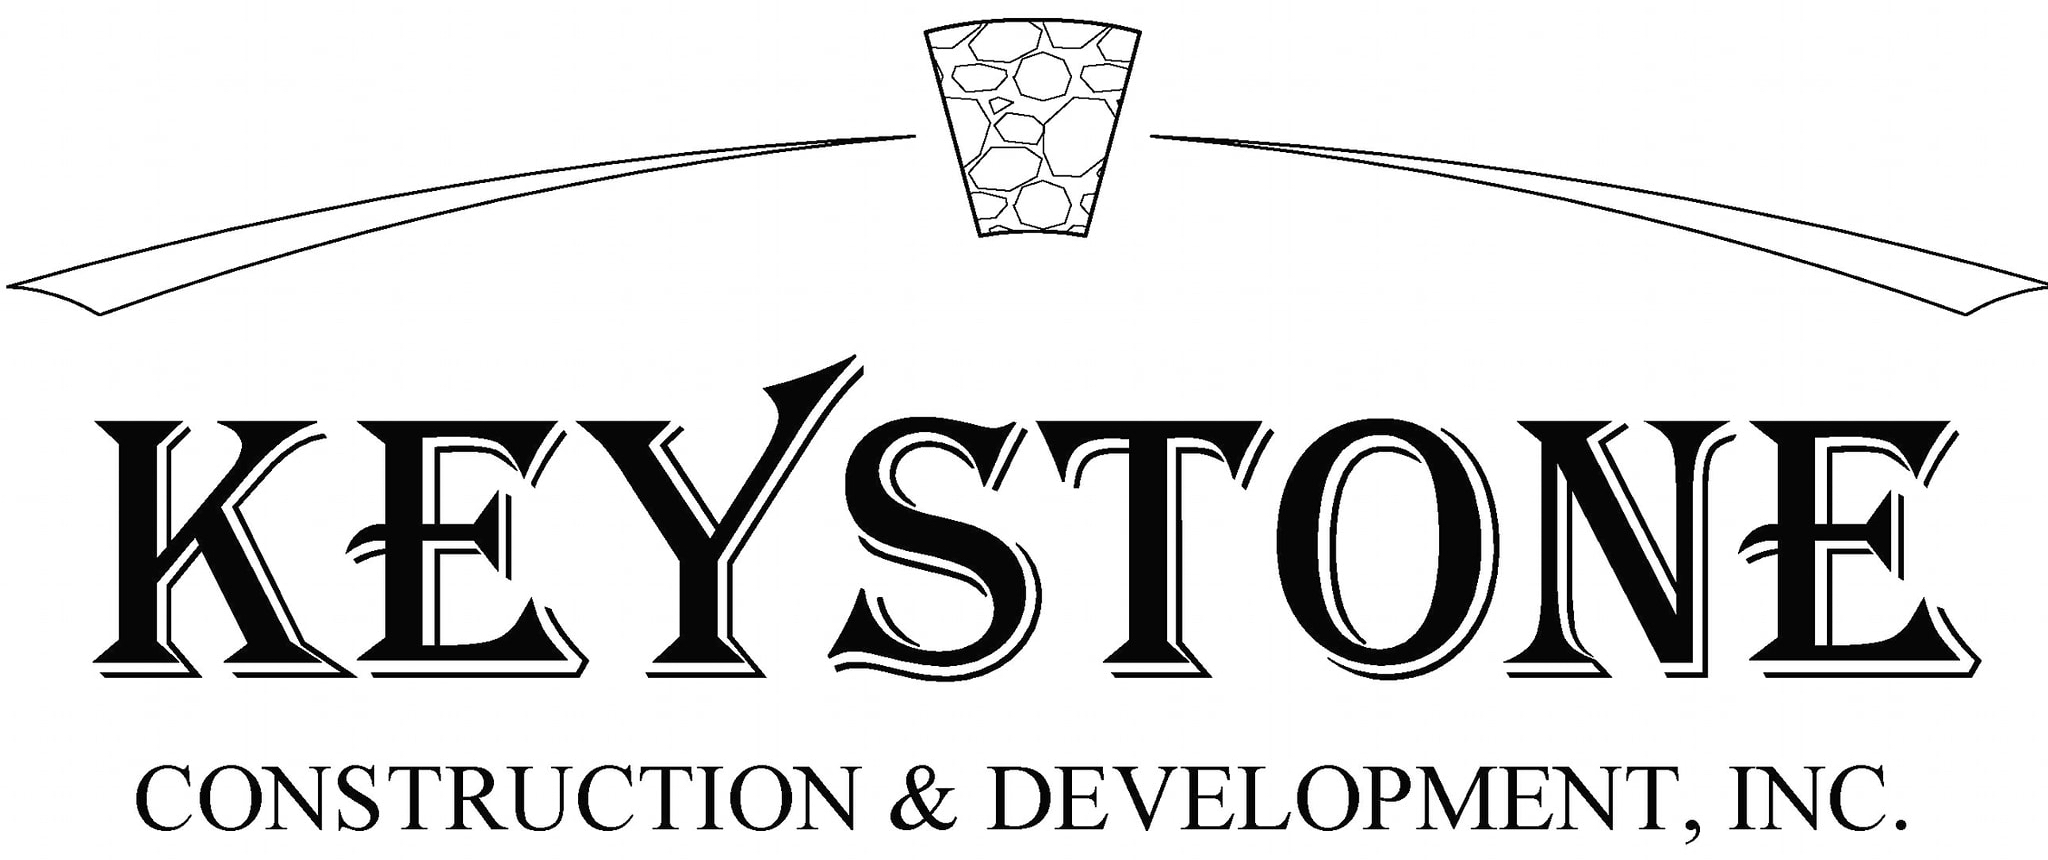 Keystone Construction & Development, Inc